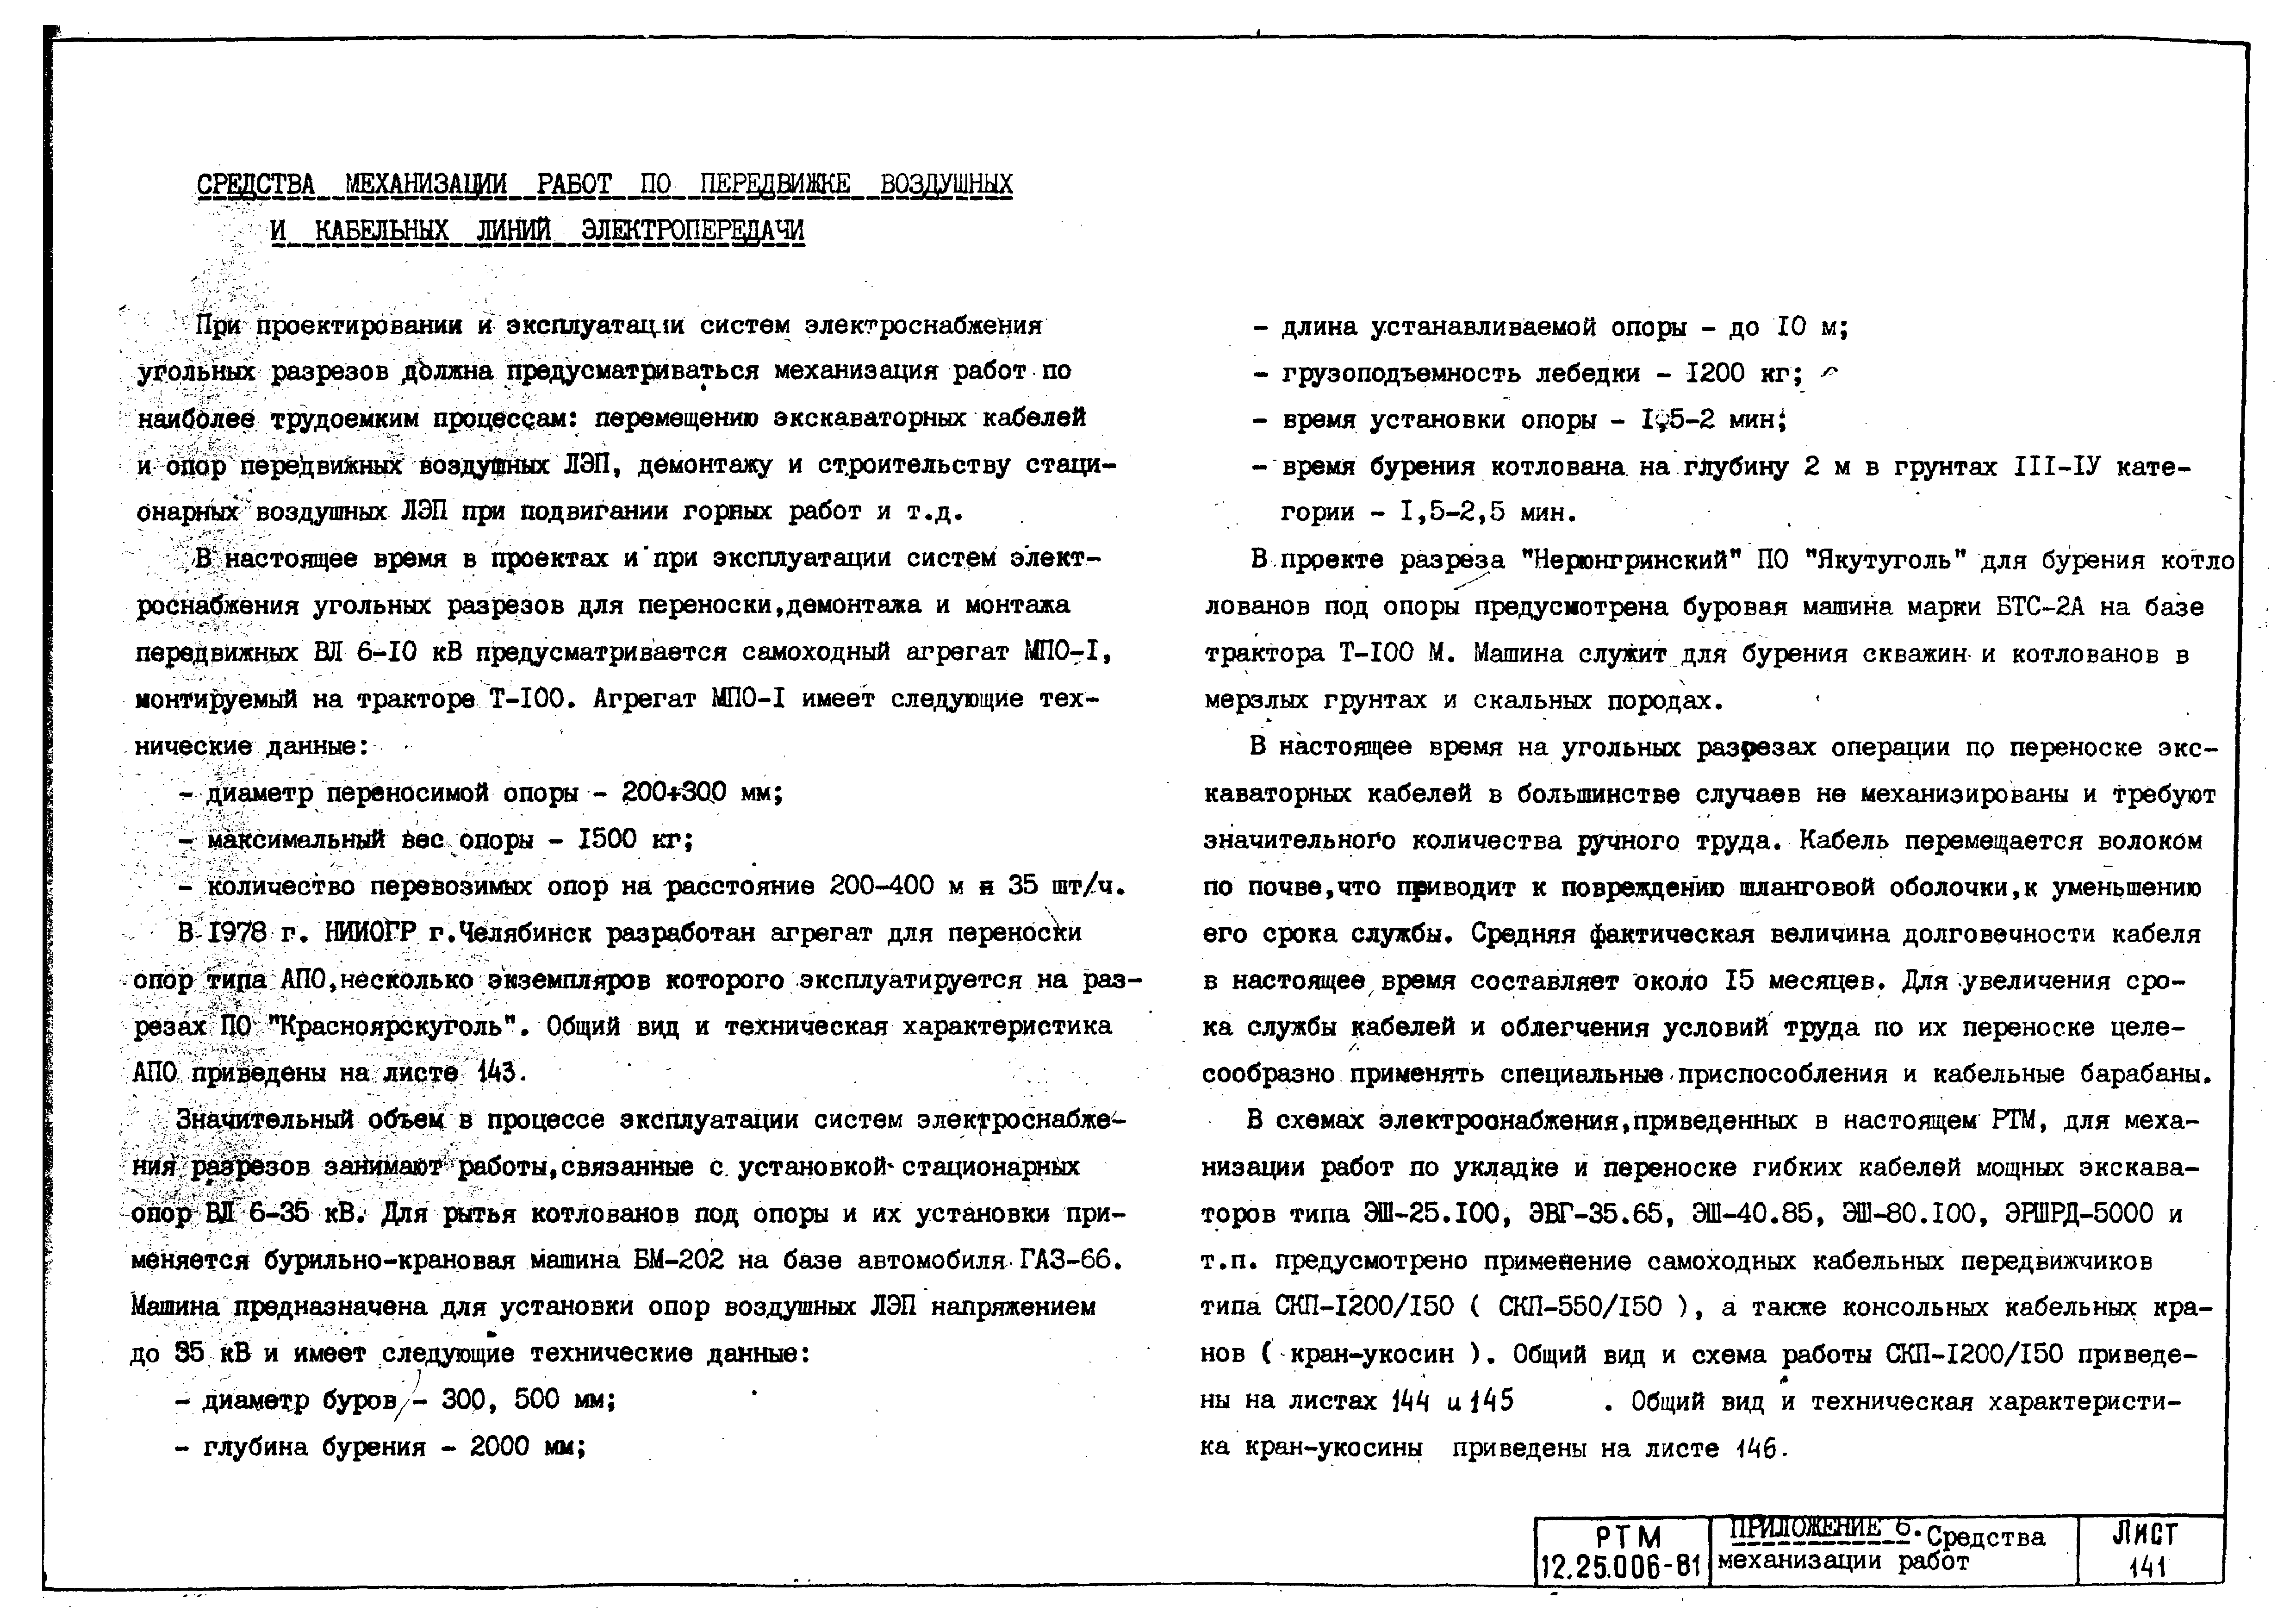 РТМ 12.25.006-81